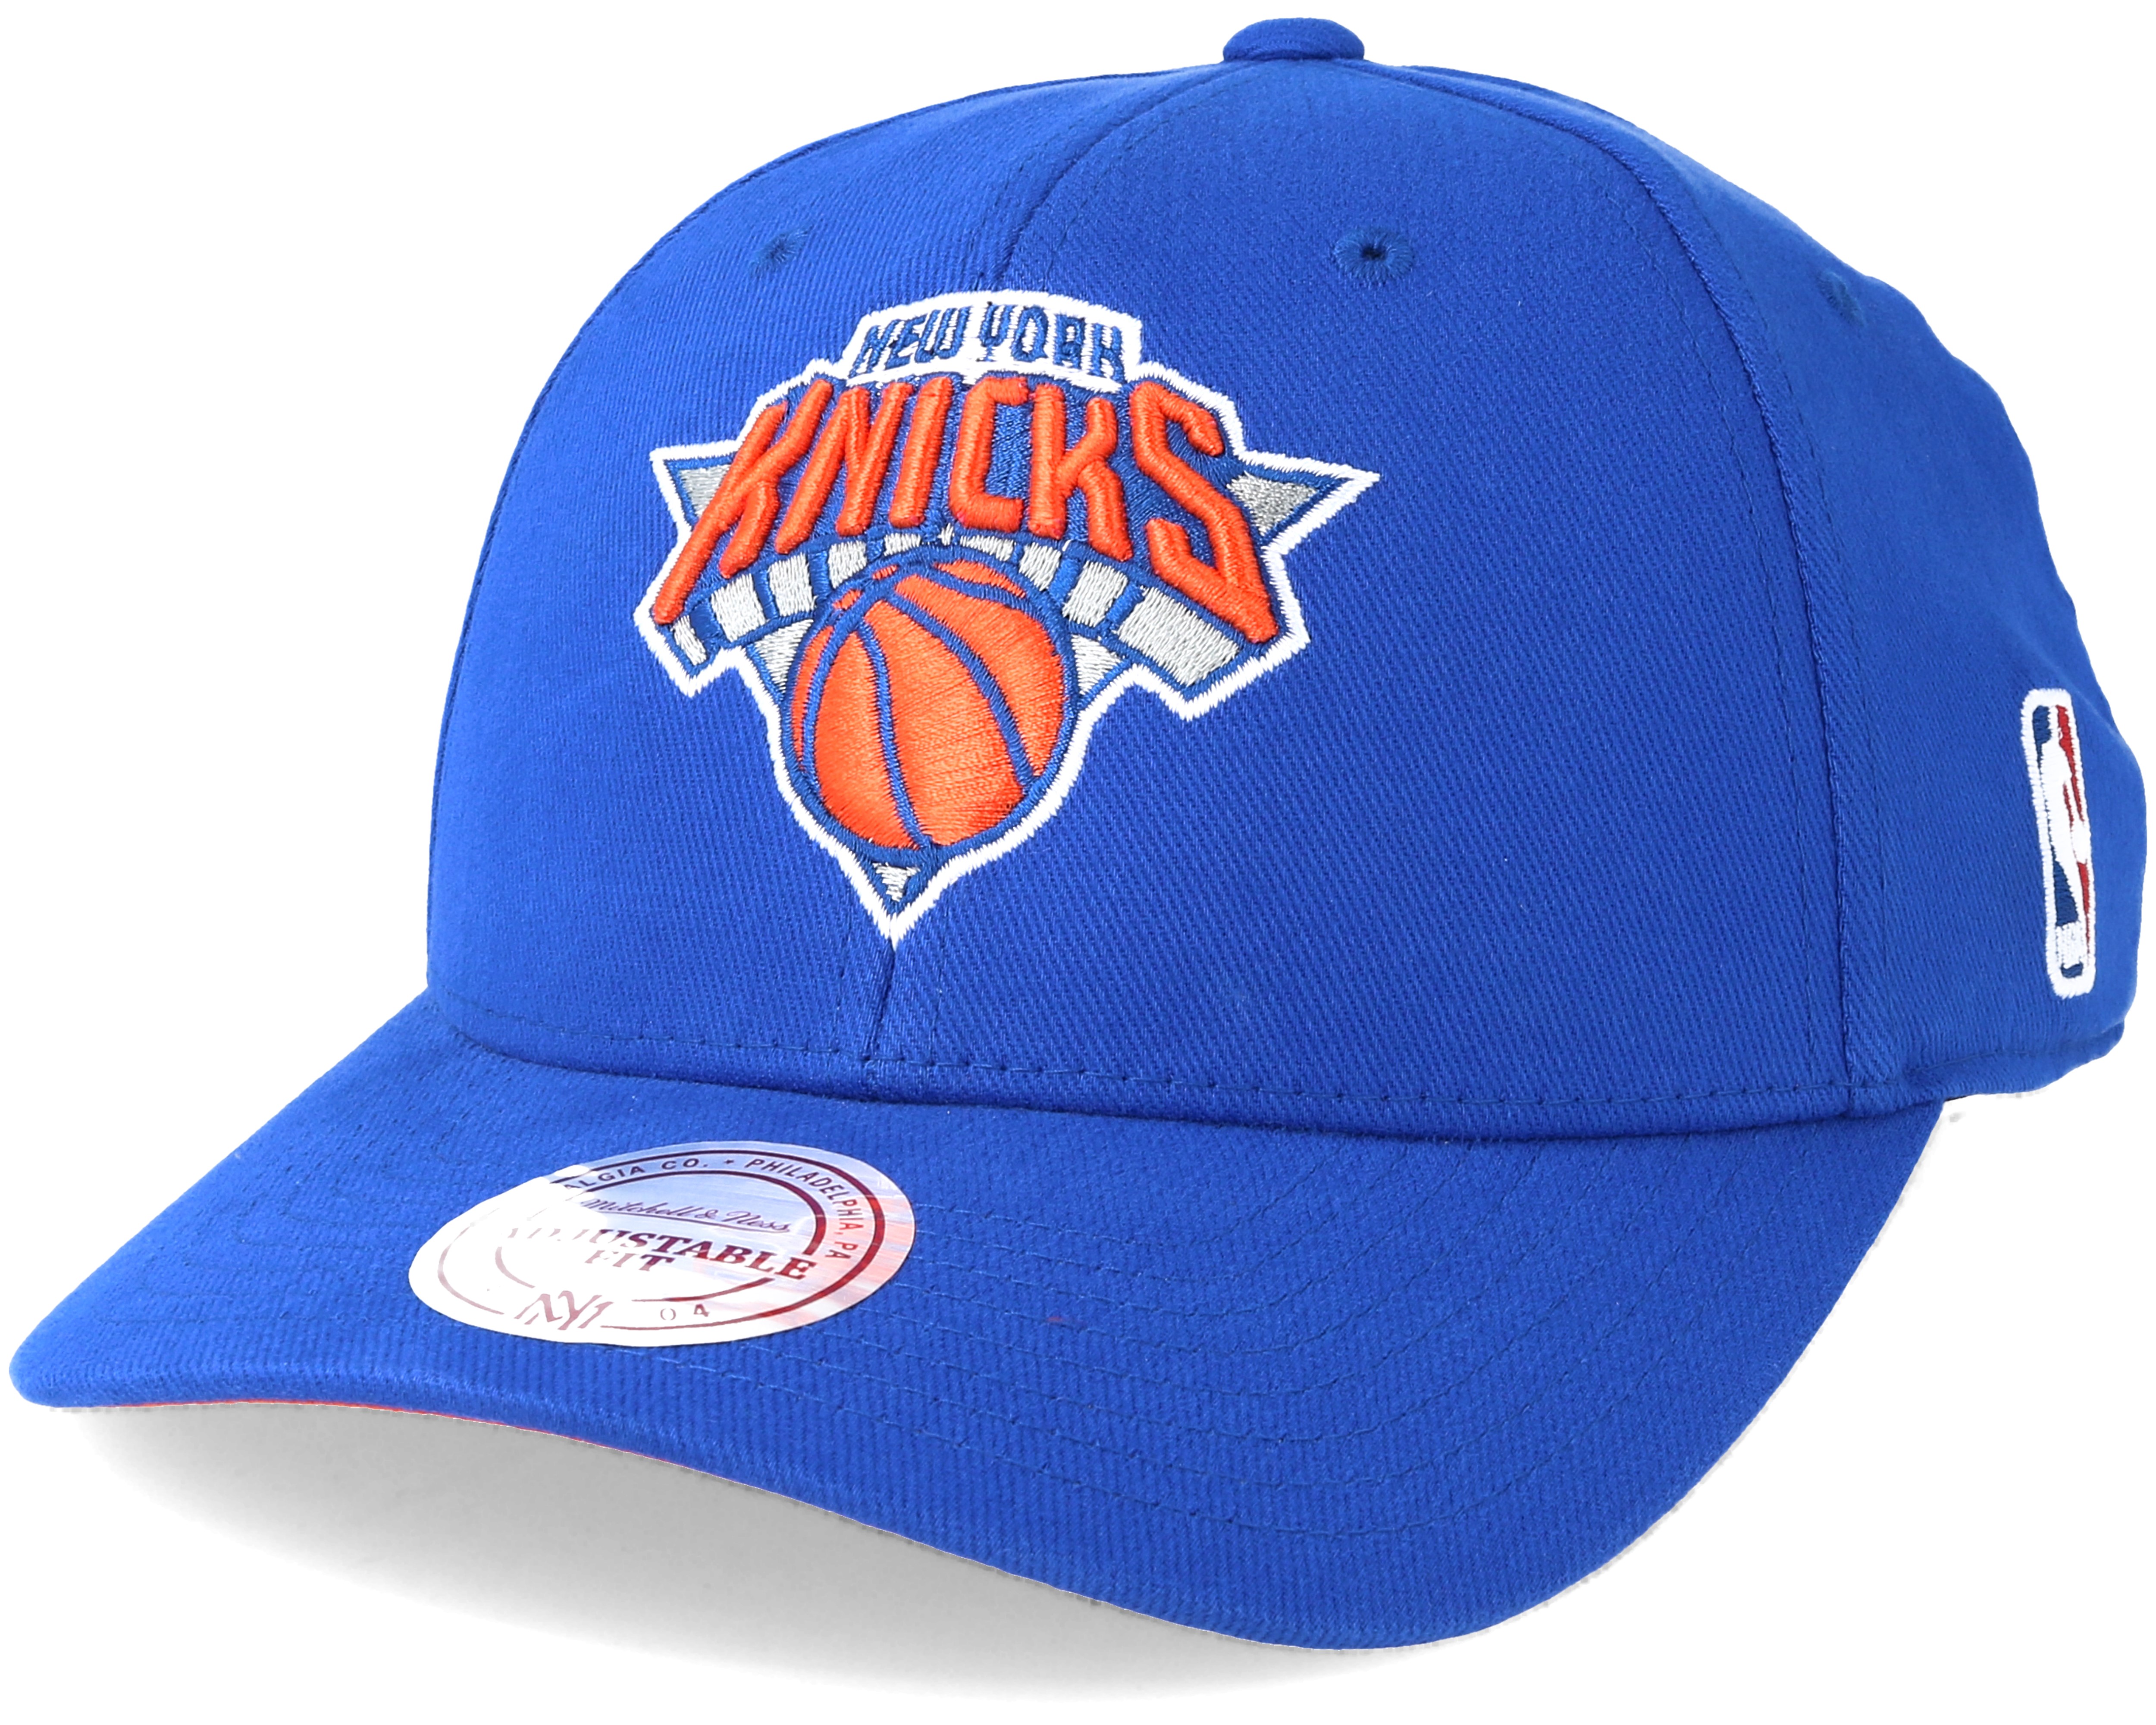 New York Knicks Flexfit 110 Low Pro Adjustable - Mitchell & Ness caps ...